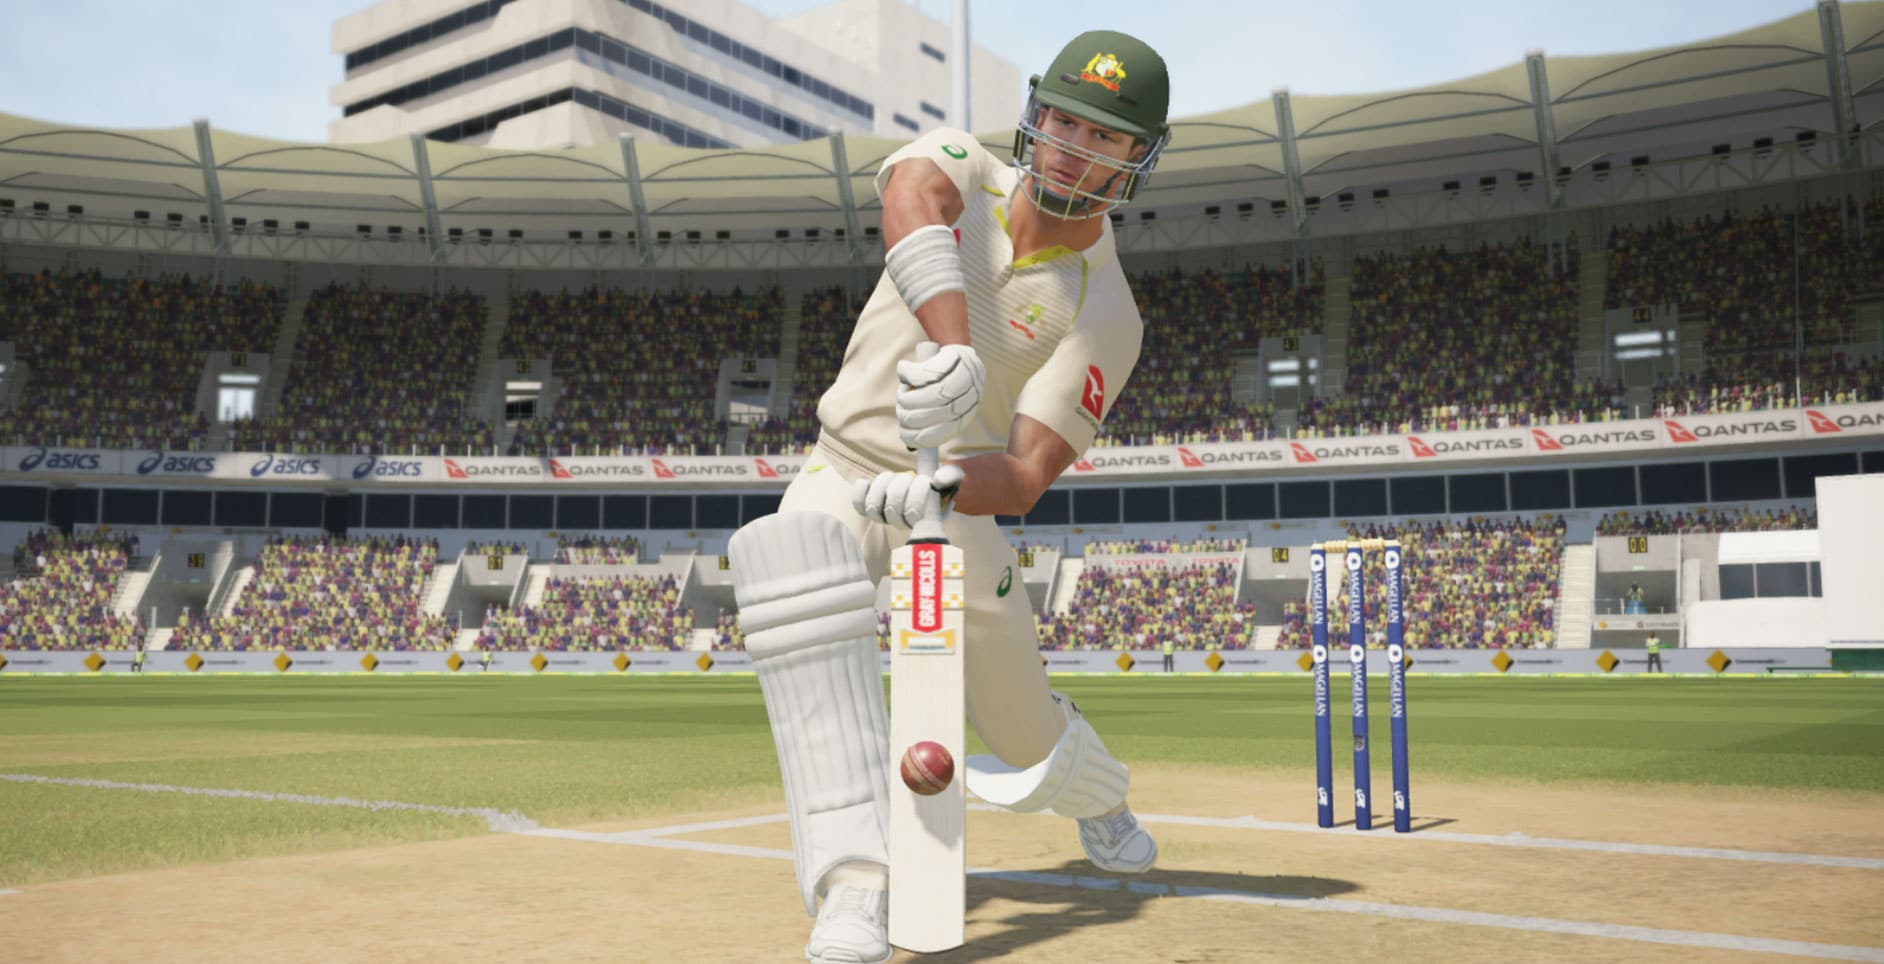 Ashes Cricket confirmado para Nintendo Switch: llegará en verano de 2019